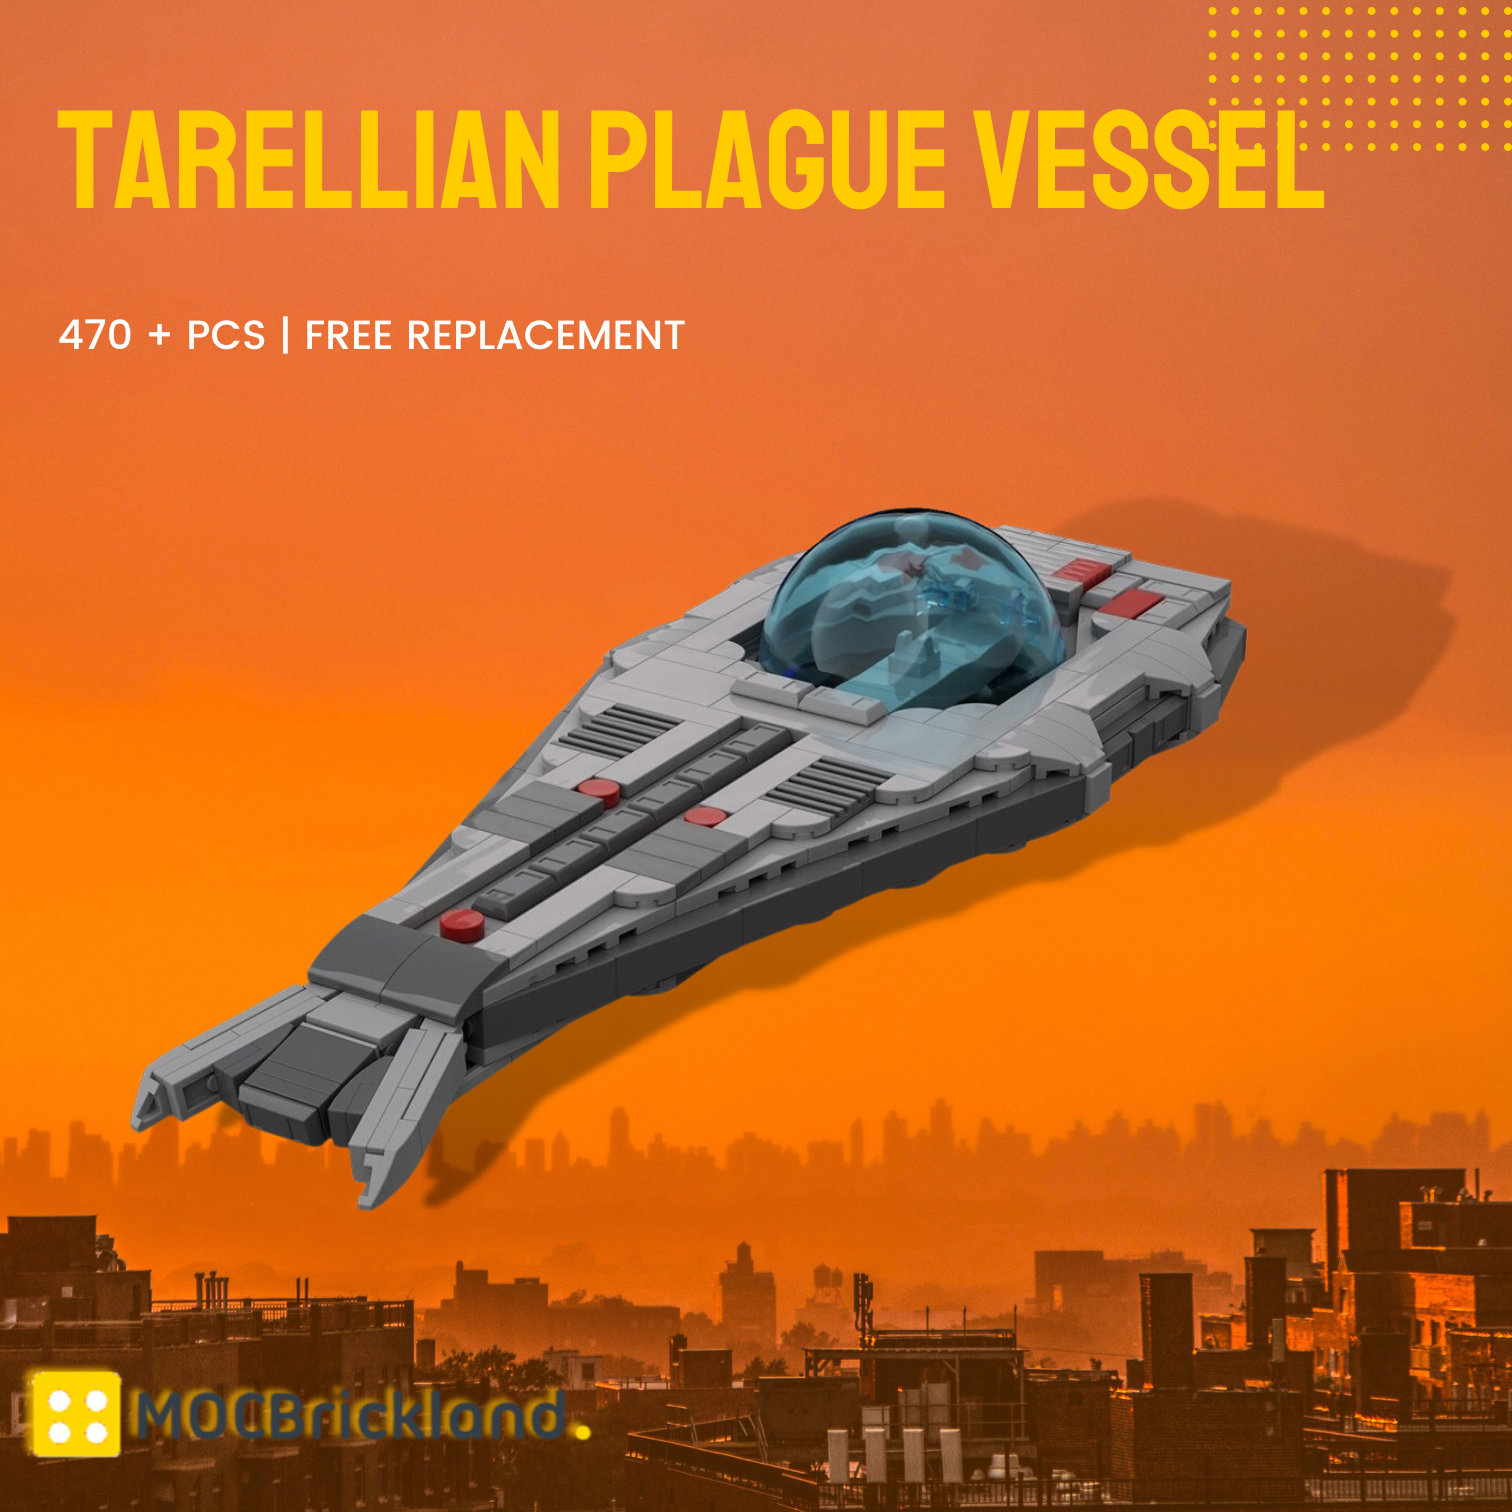 Tarellian Plague Vessel Moc 119084